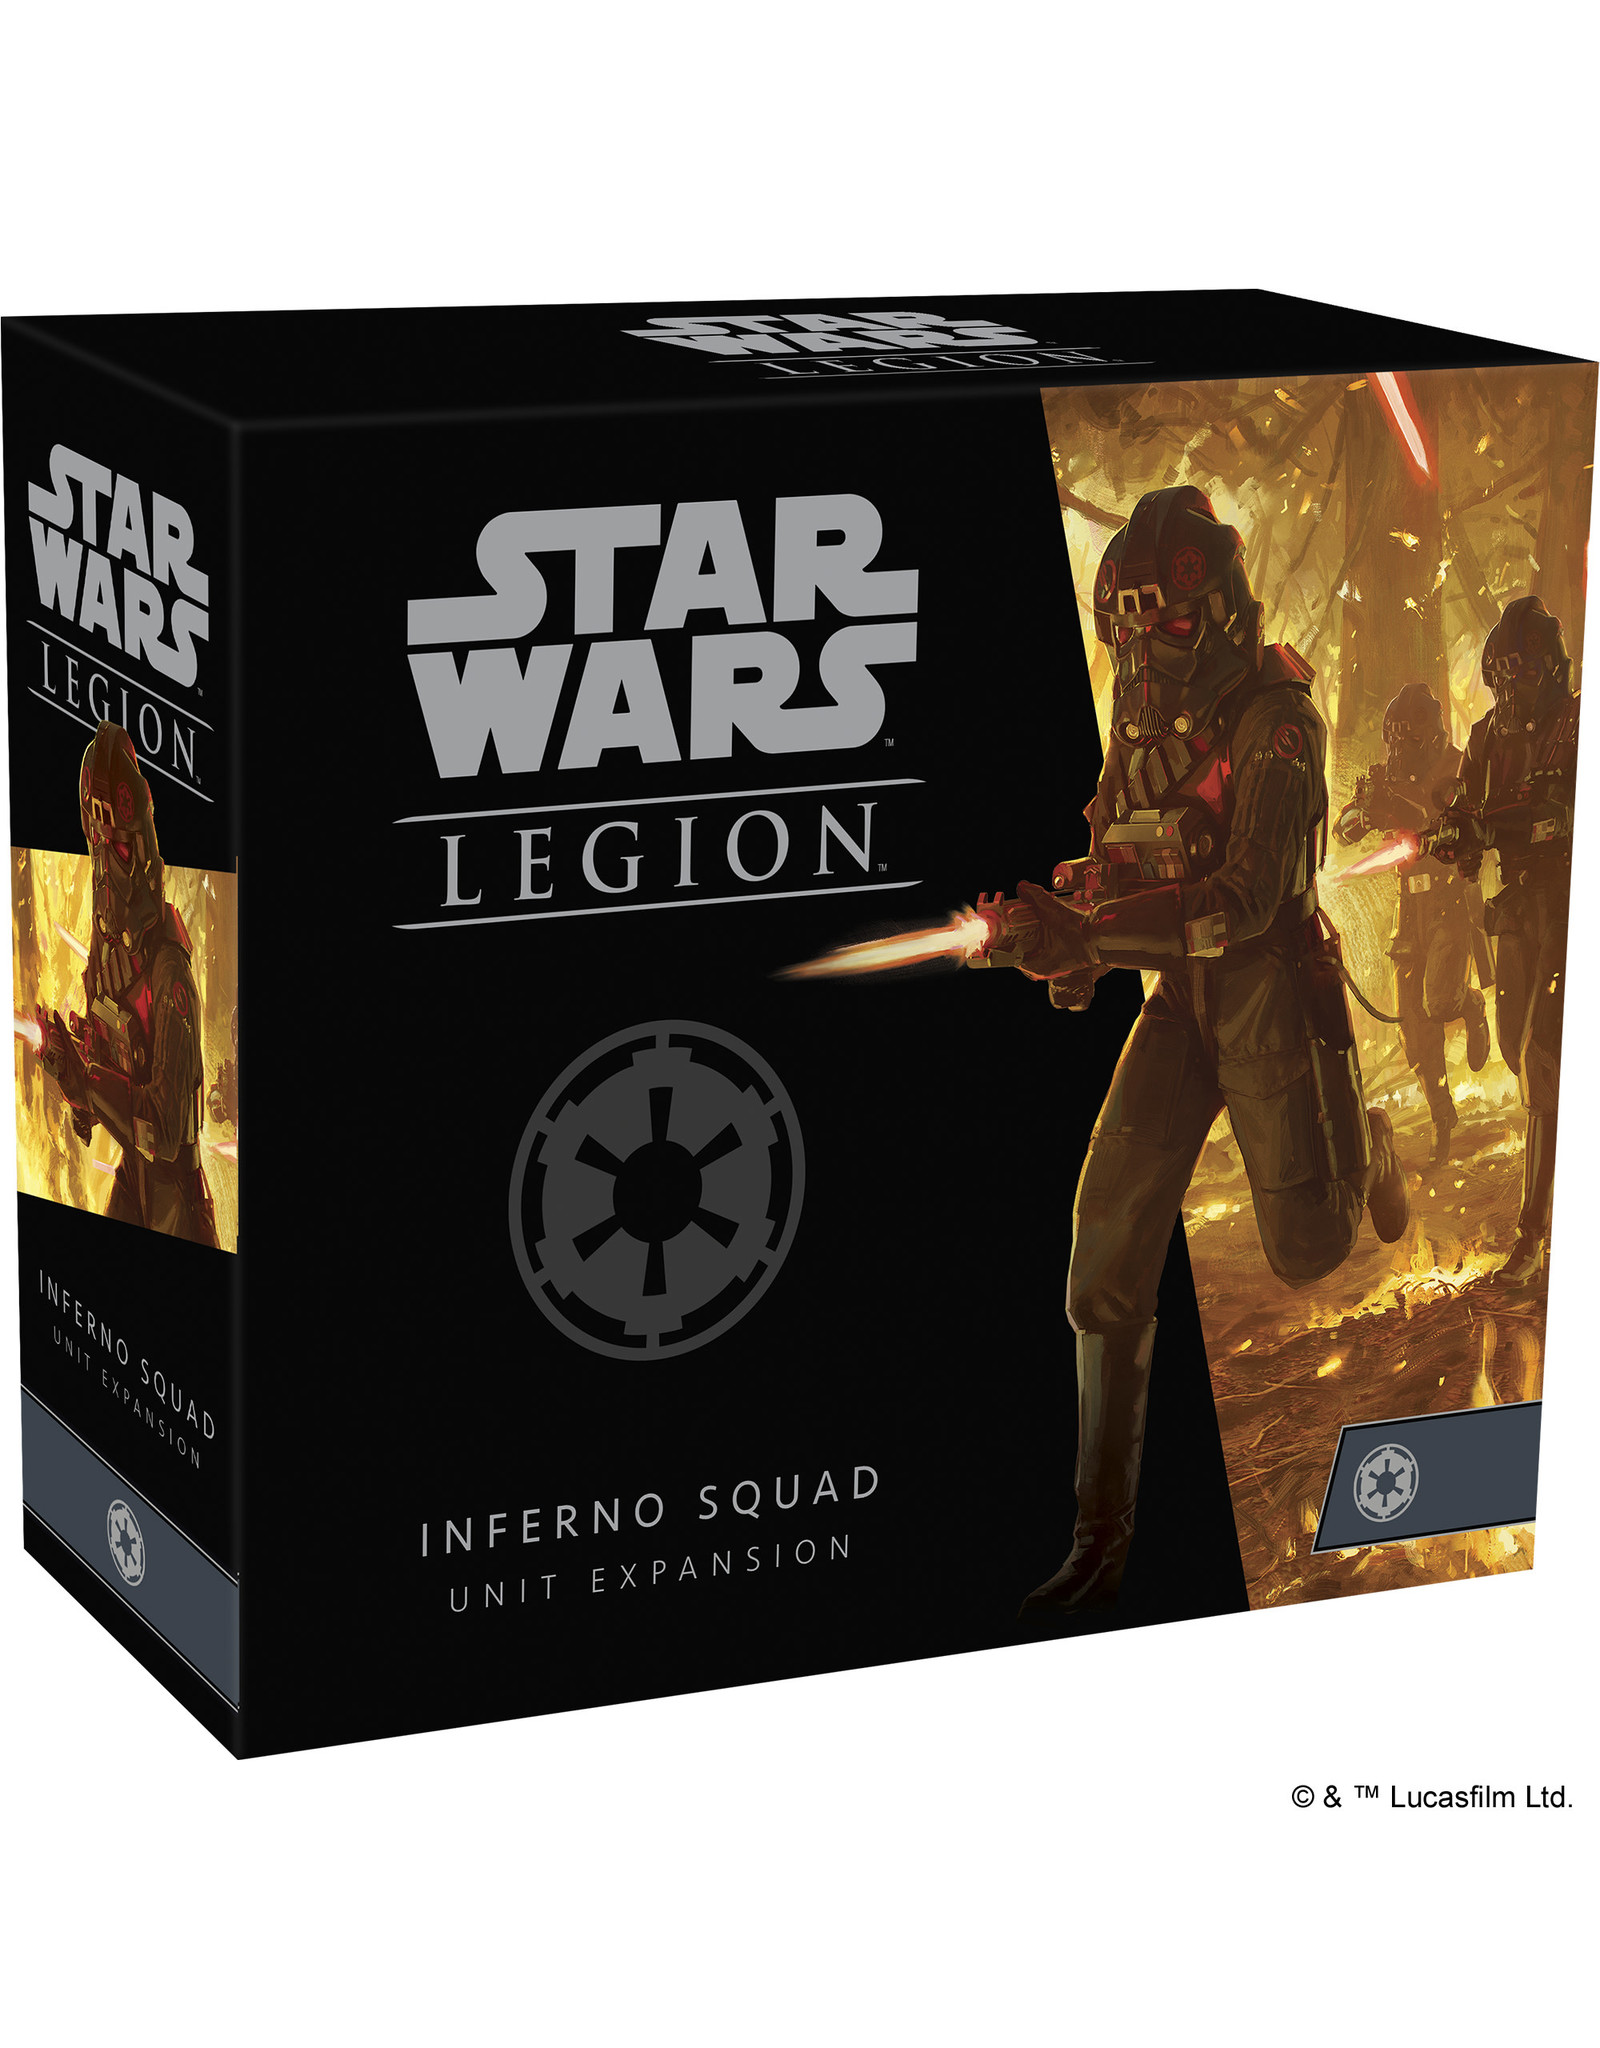 STAR WARS LEGION Star Wars Legion Inferno Squad Unit Expansion